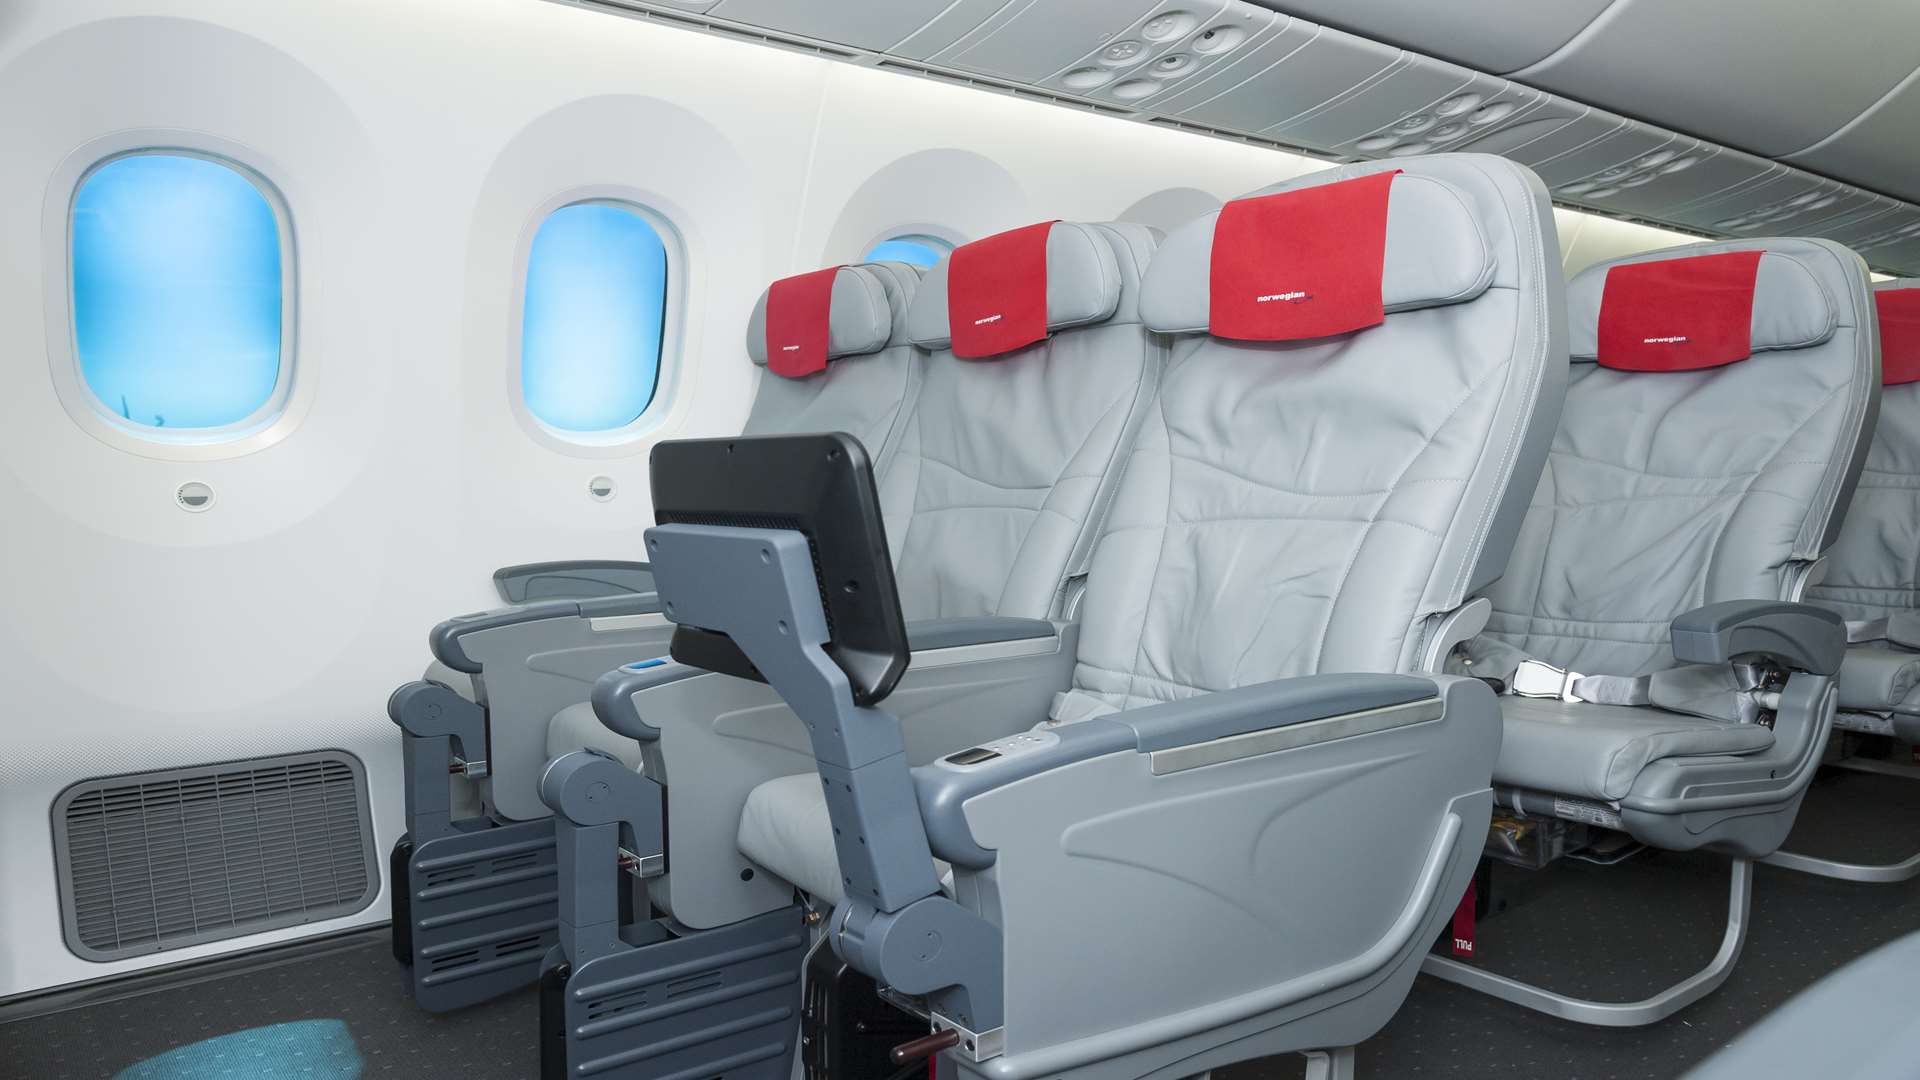 Premium passengers can enjoy 46 inches of leg room.